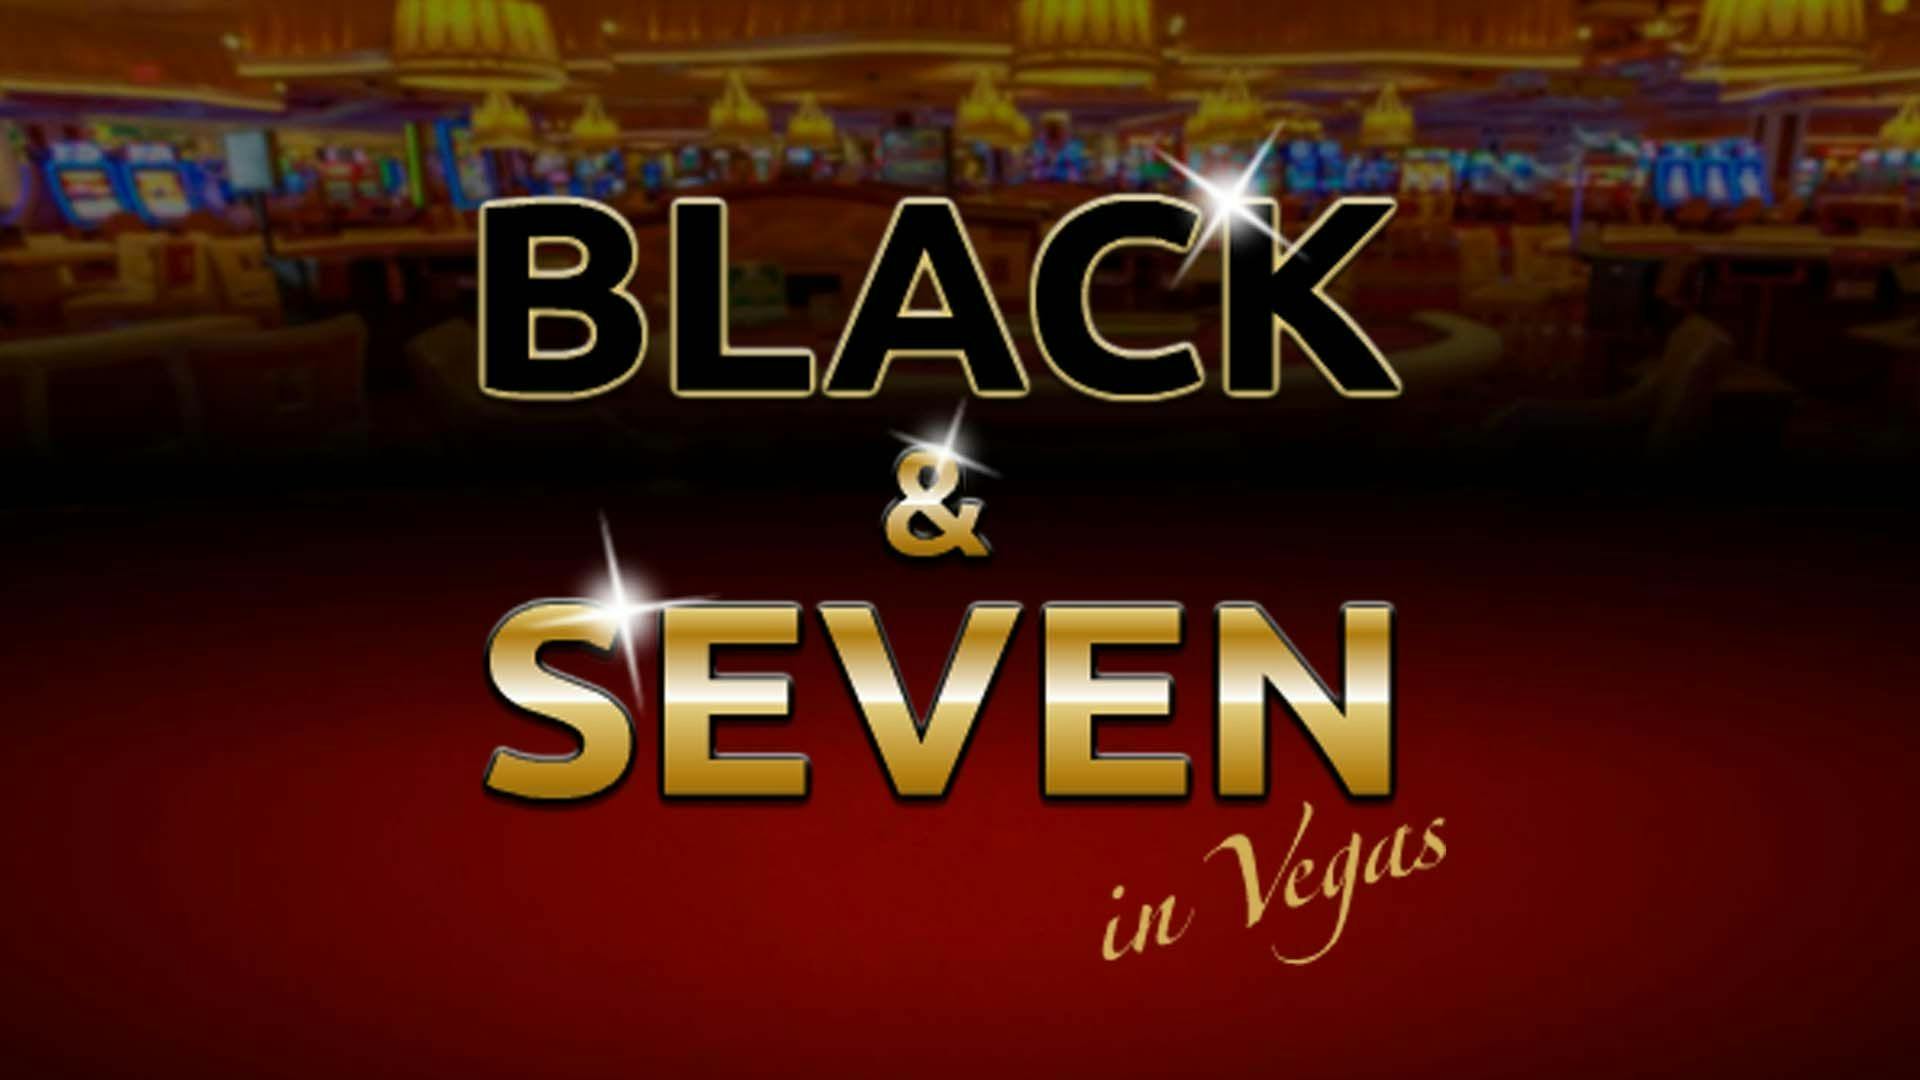 Black & Seven In Vegas Slot Machine Online Free Game Play